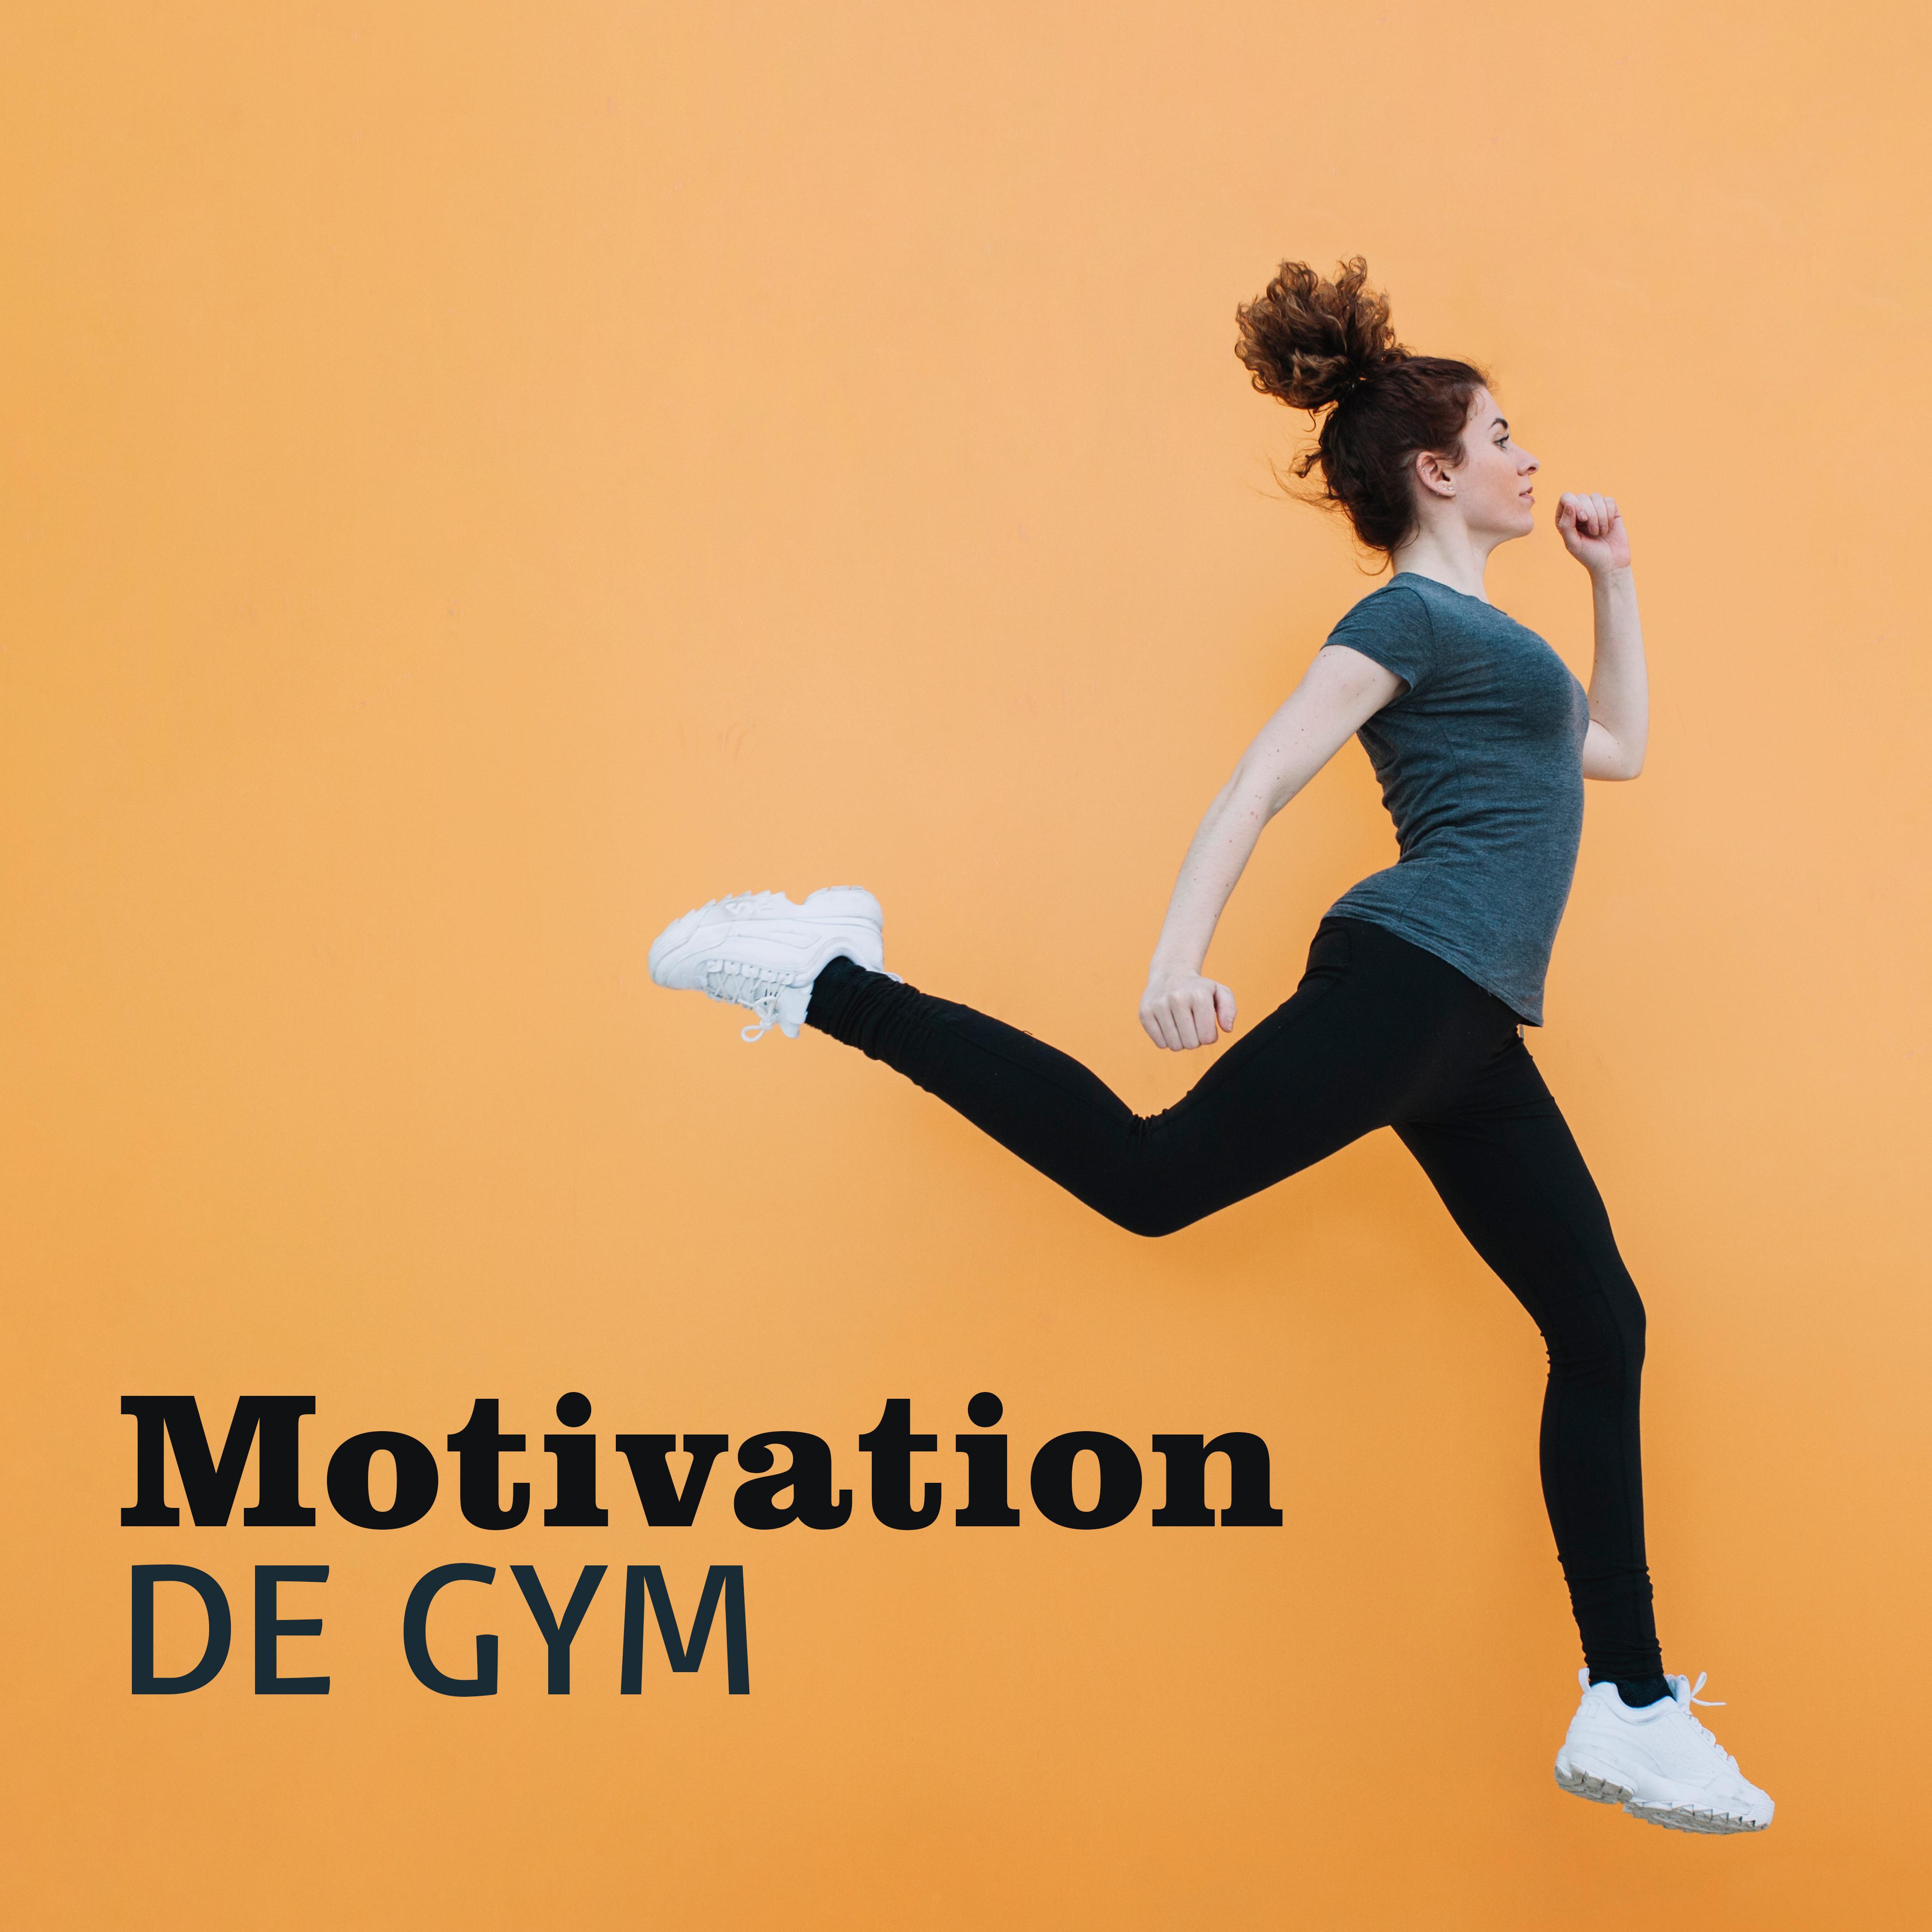 Motivation de gym